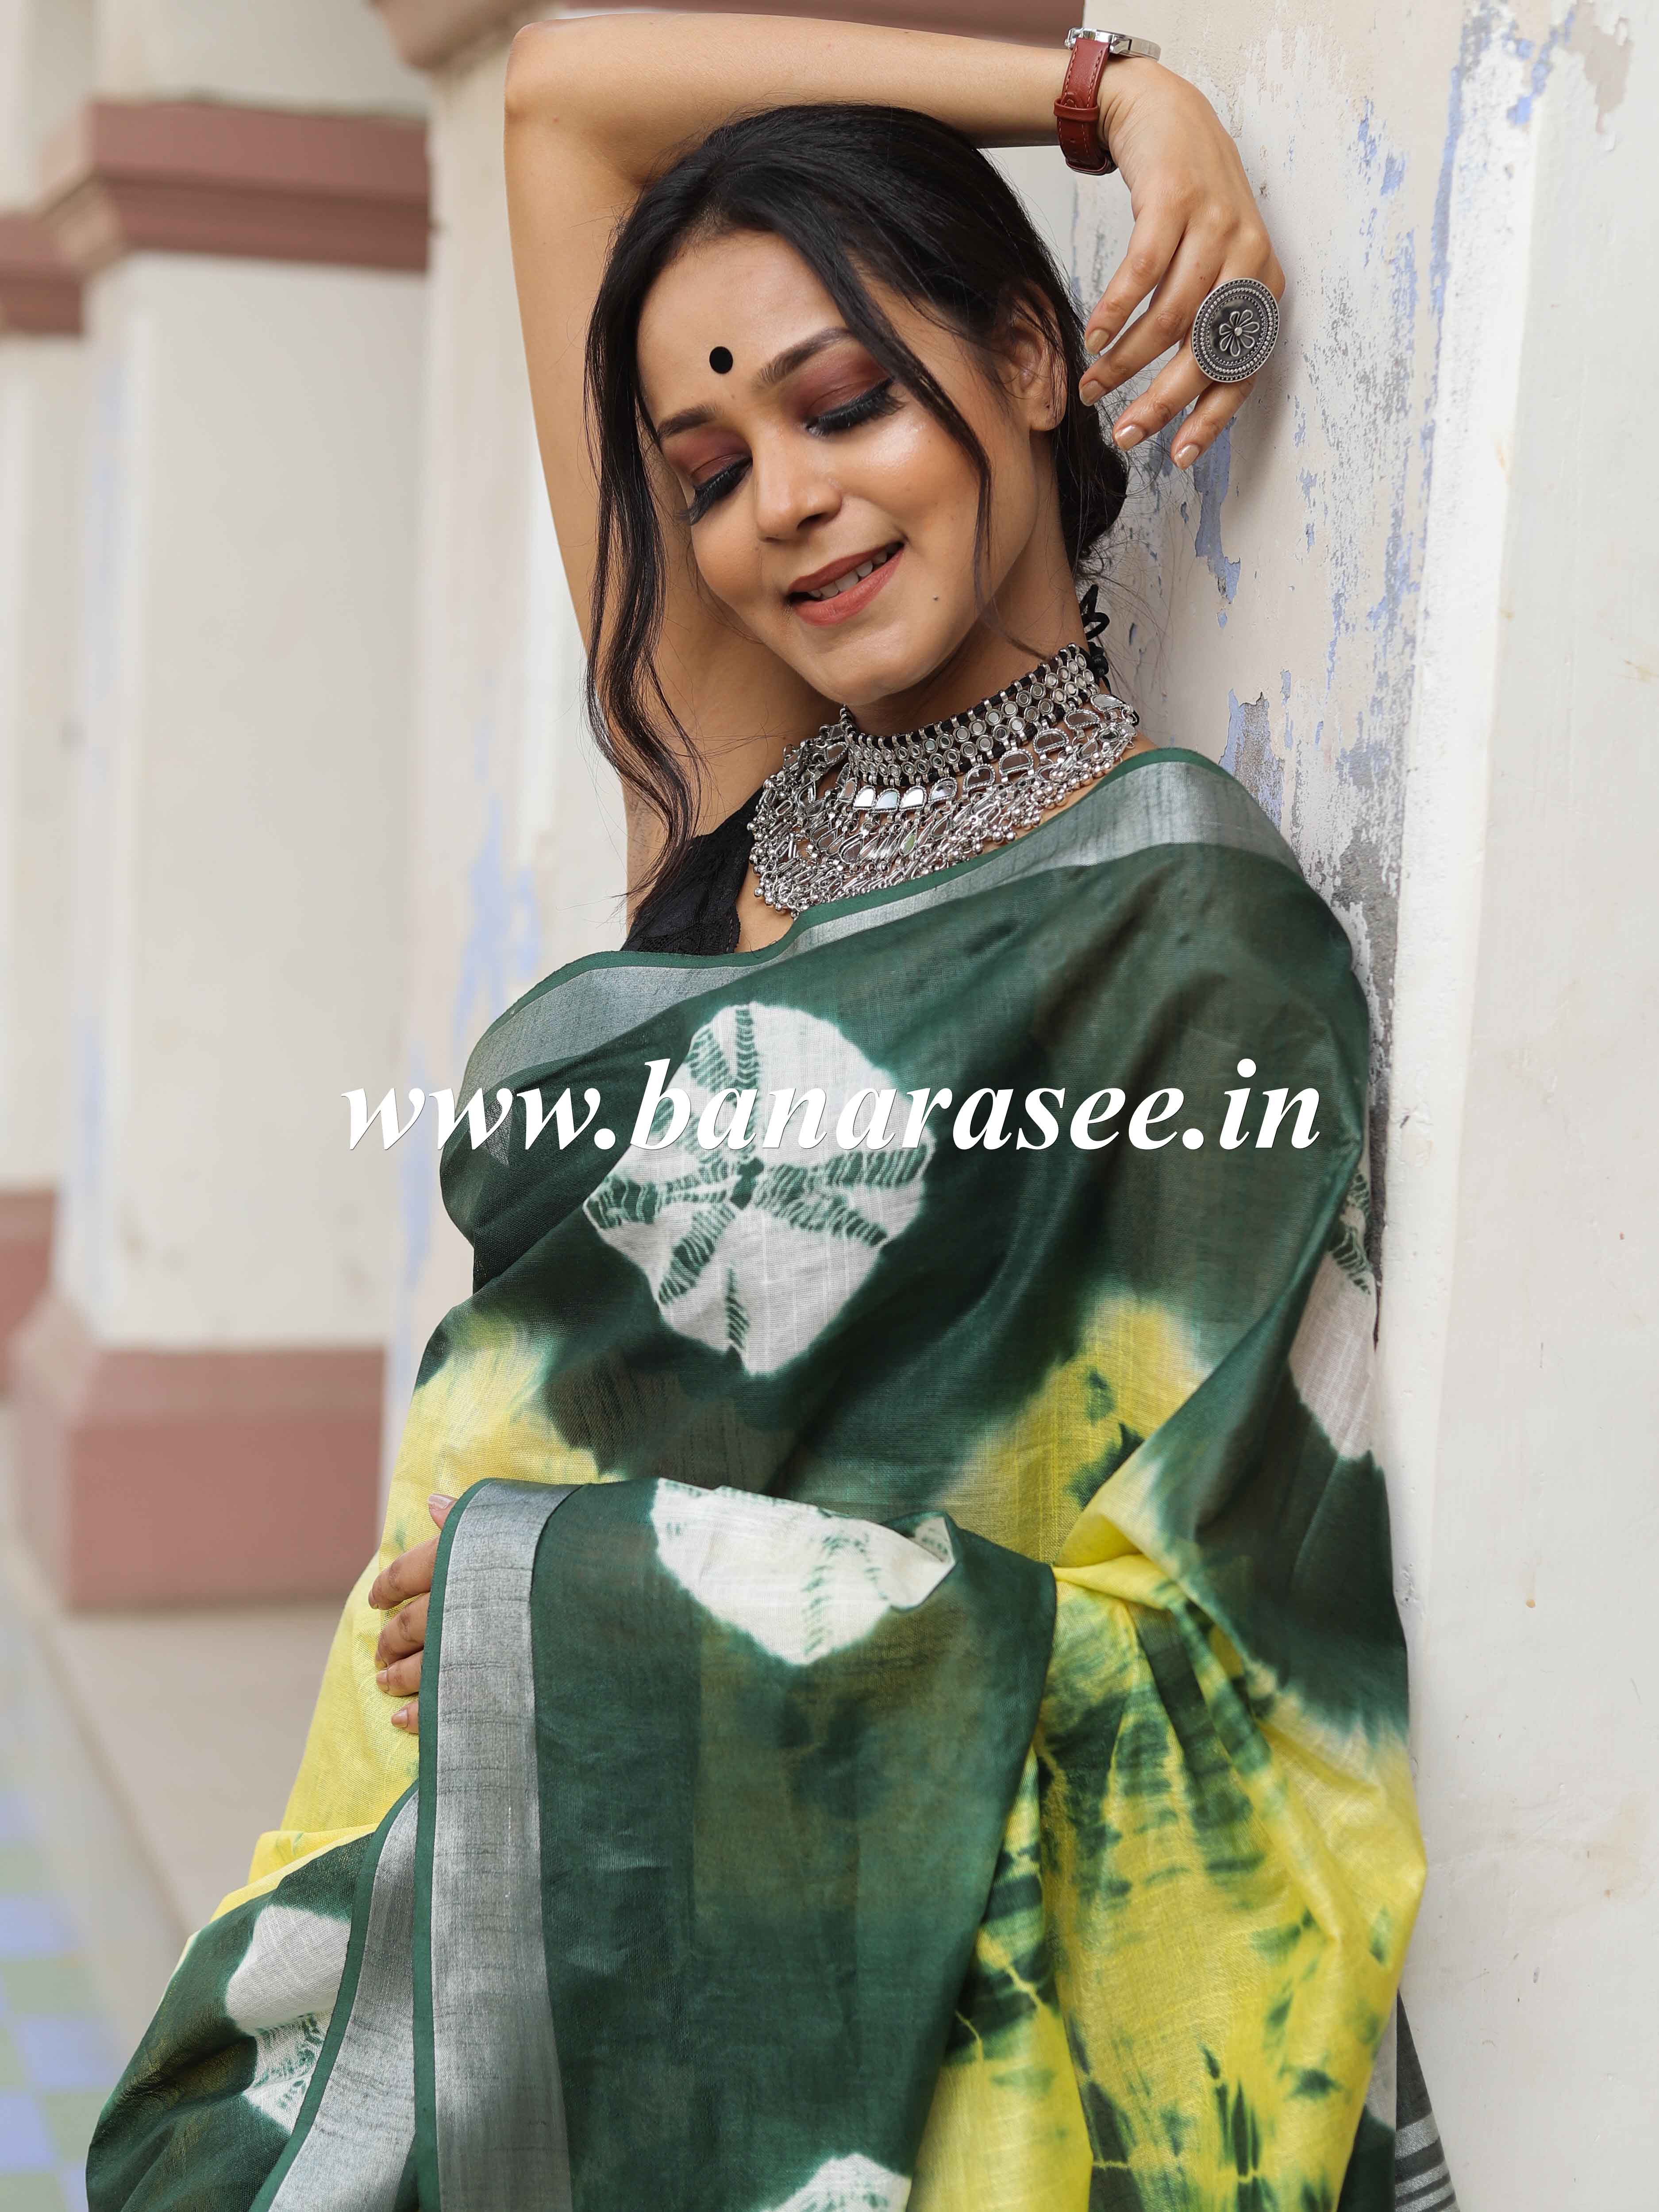 Bhagalpur Handloom Pure Linen Cotton Hand-Dyed Shibori Pattern Saree-Green & Yellow